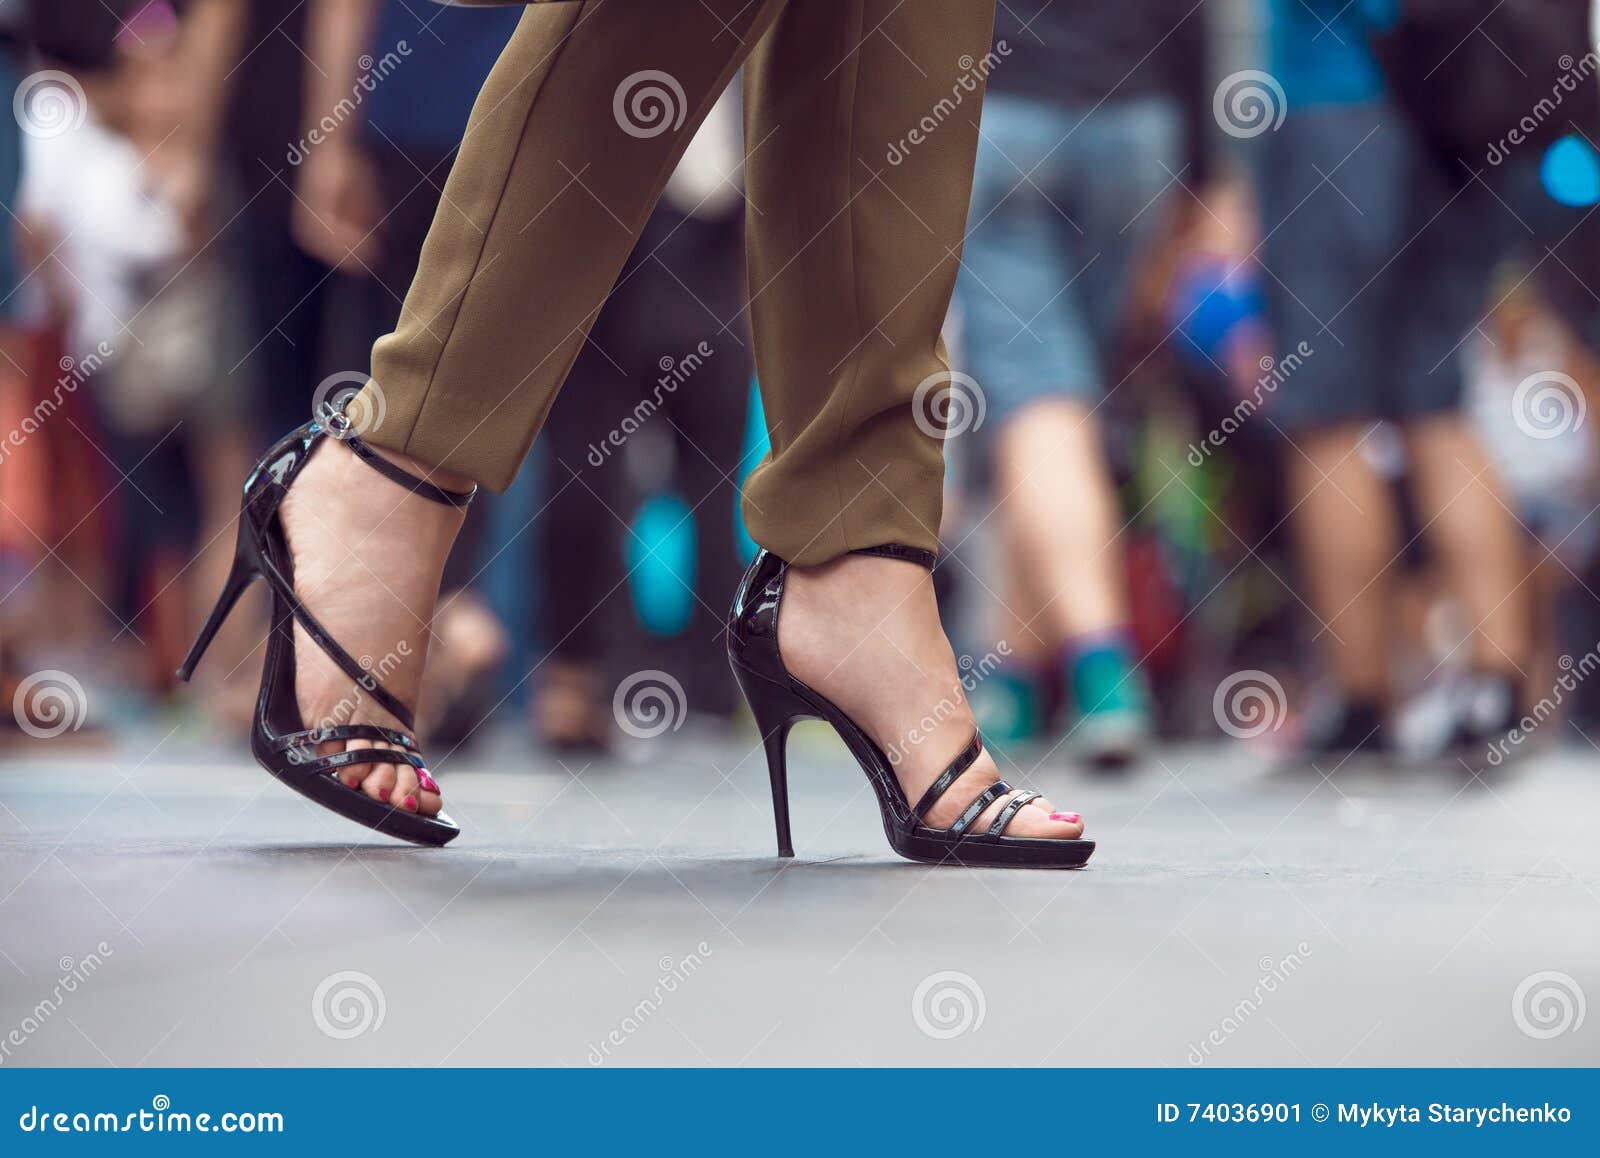 city step shoes